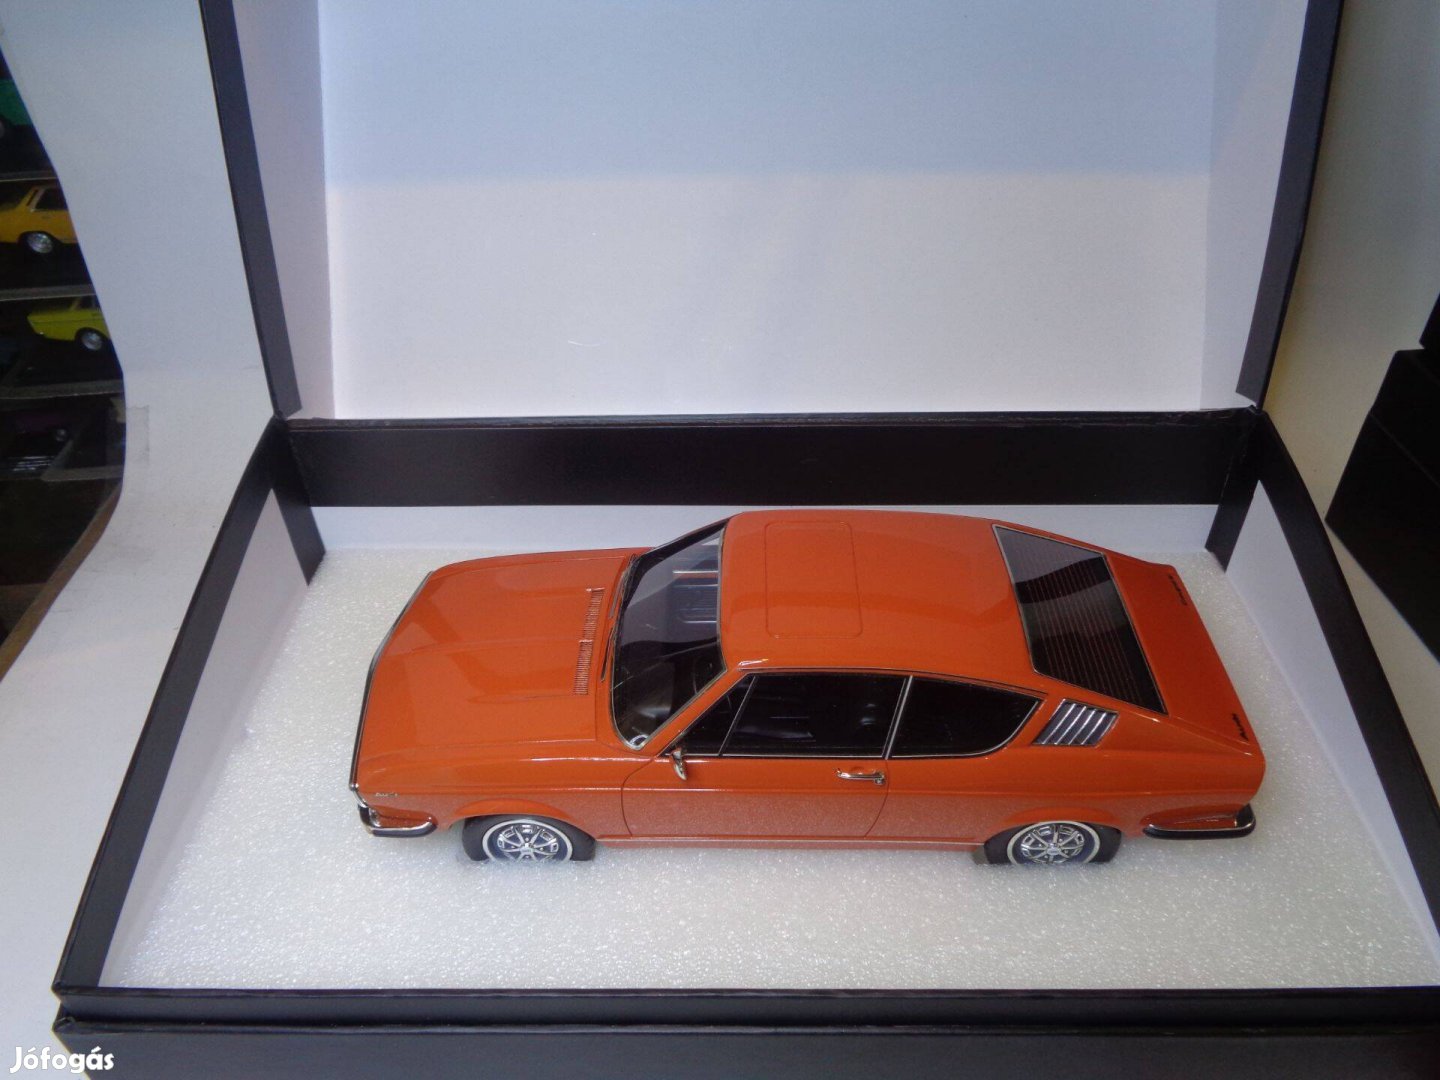 Eladó 1971 Audi 100 Coupe S C1 Orange KK Scale Kkre18003 1:18 Resin